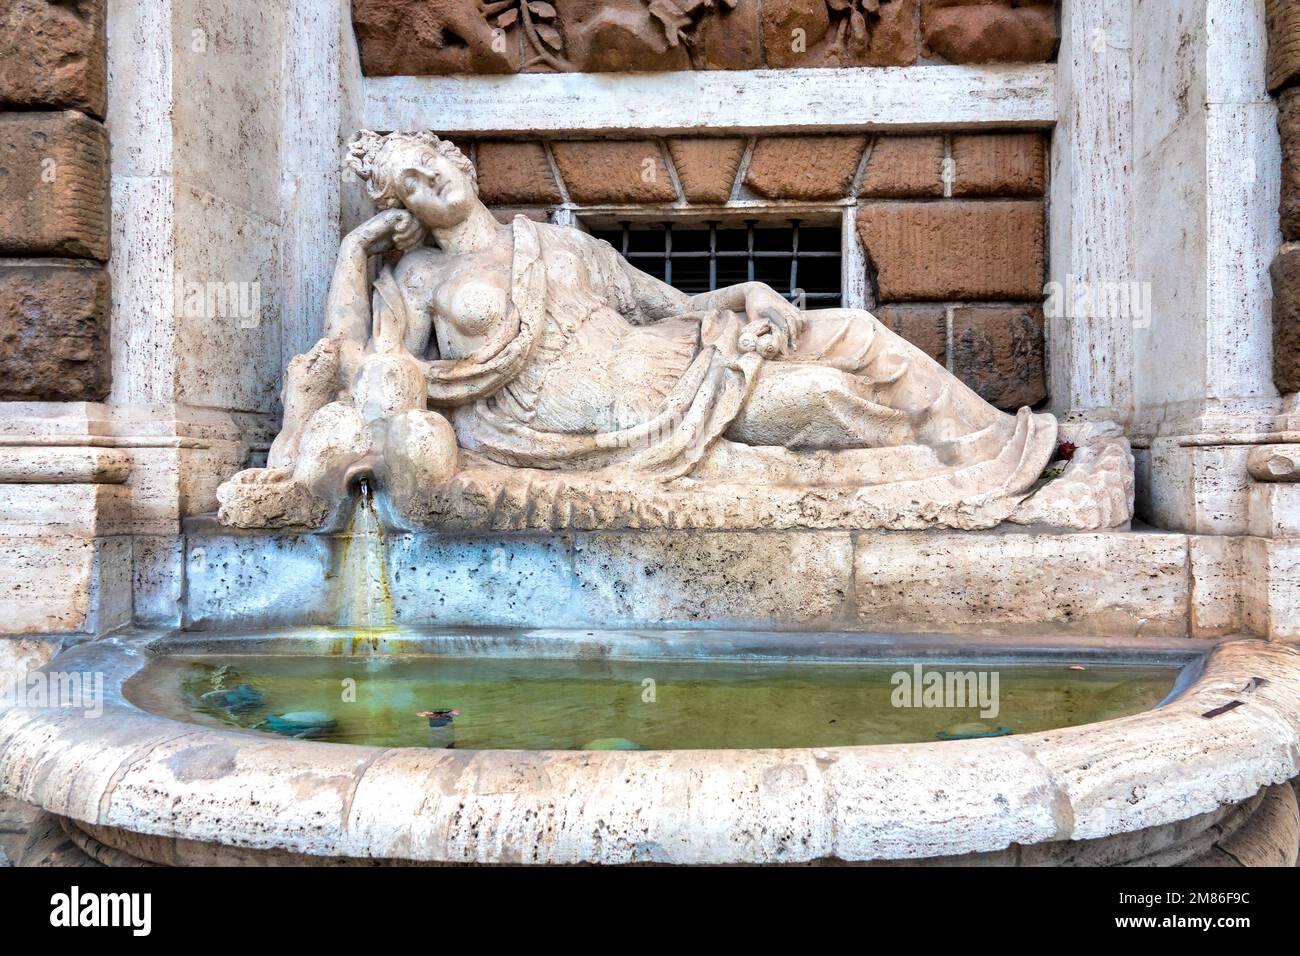 Statue of the Goddess Diana in Piazza delle Quattro Fontane, Rome, Italy Stock Photo